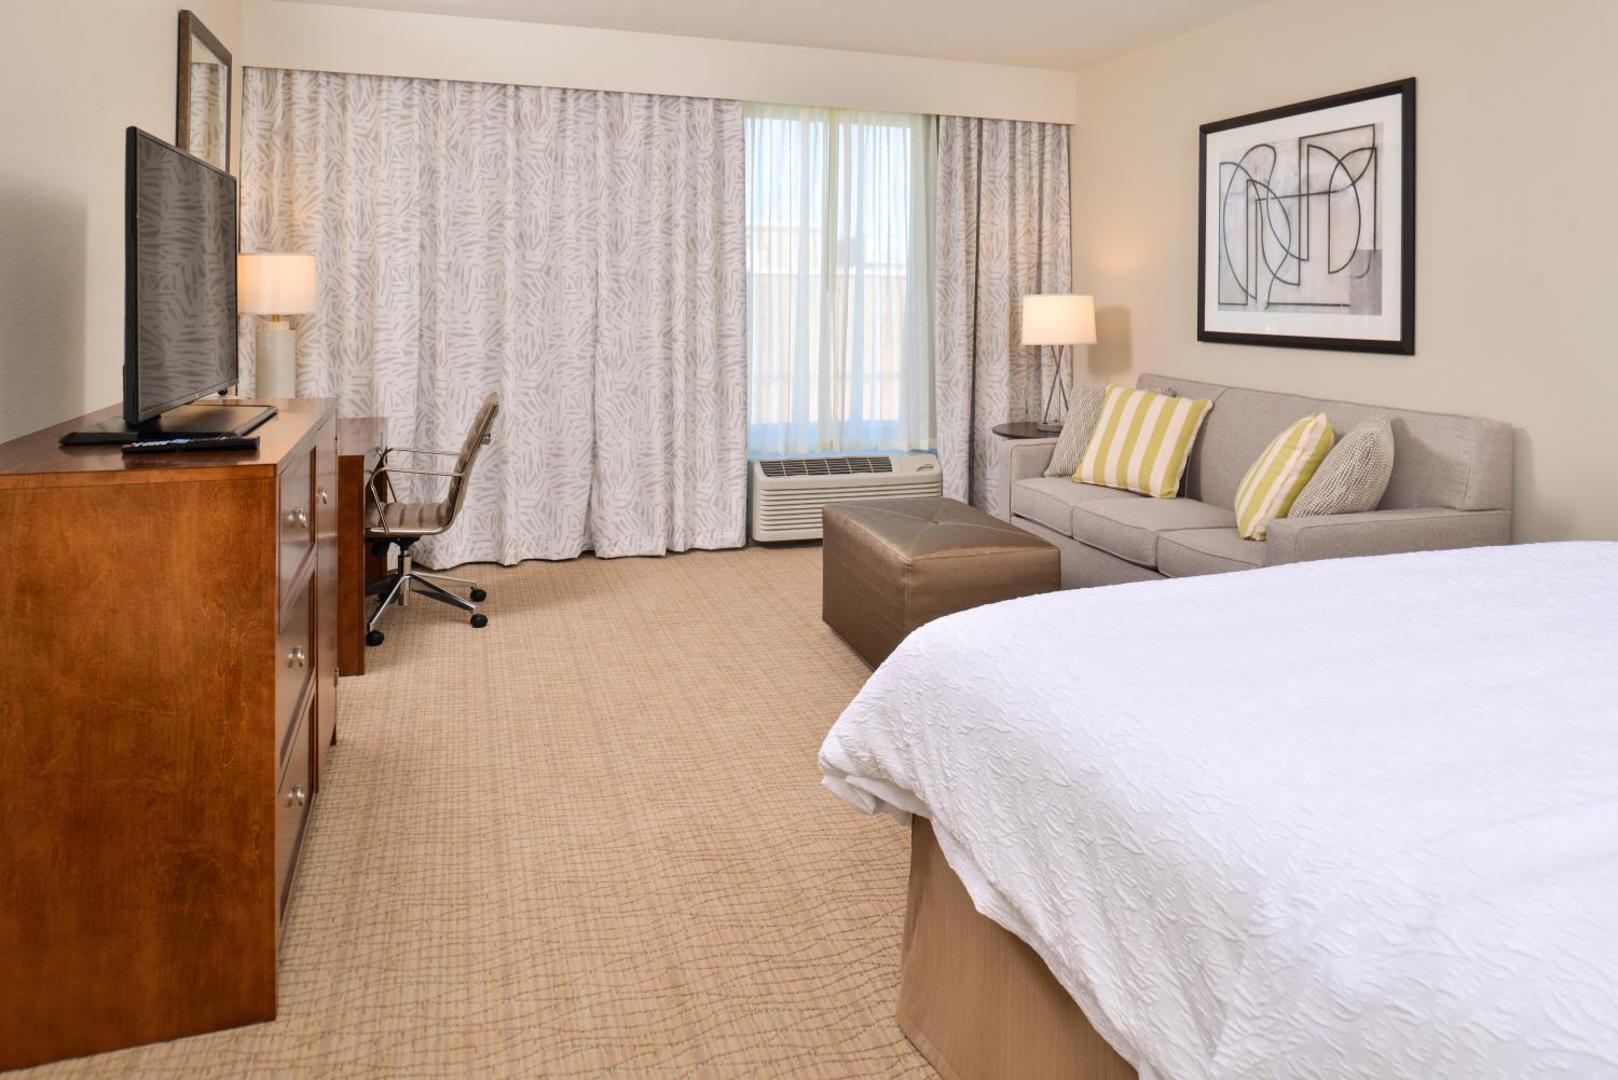 Hampton Inn & Suites Orlando/Downtown South - Medical Center